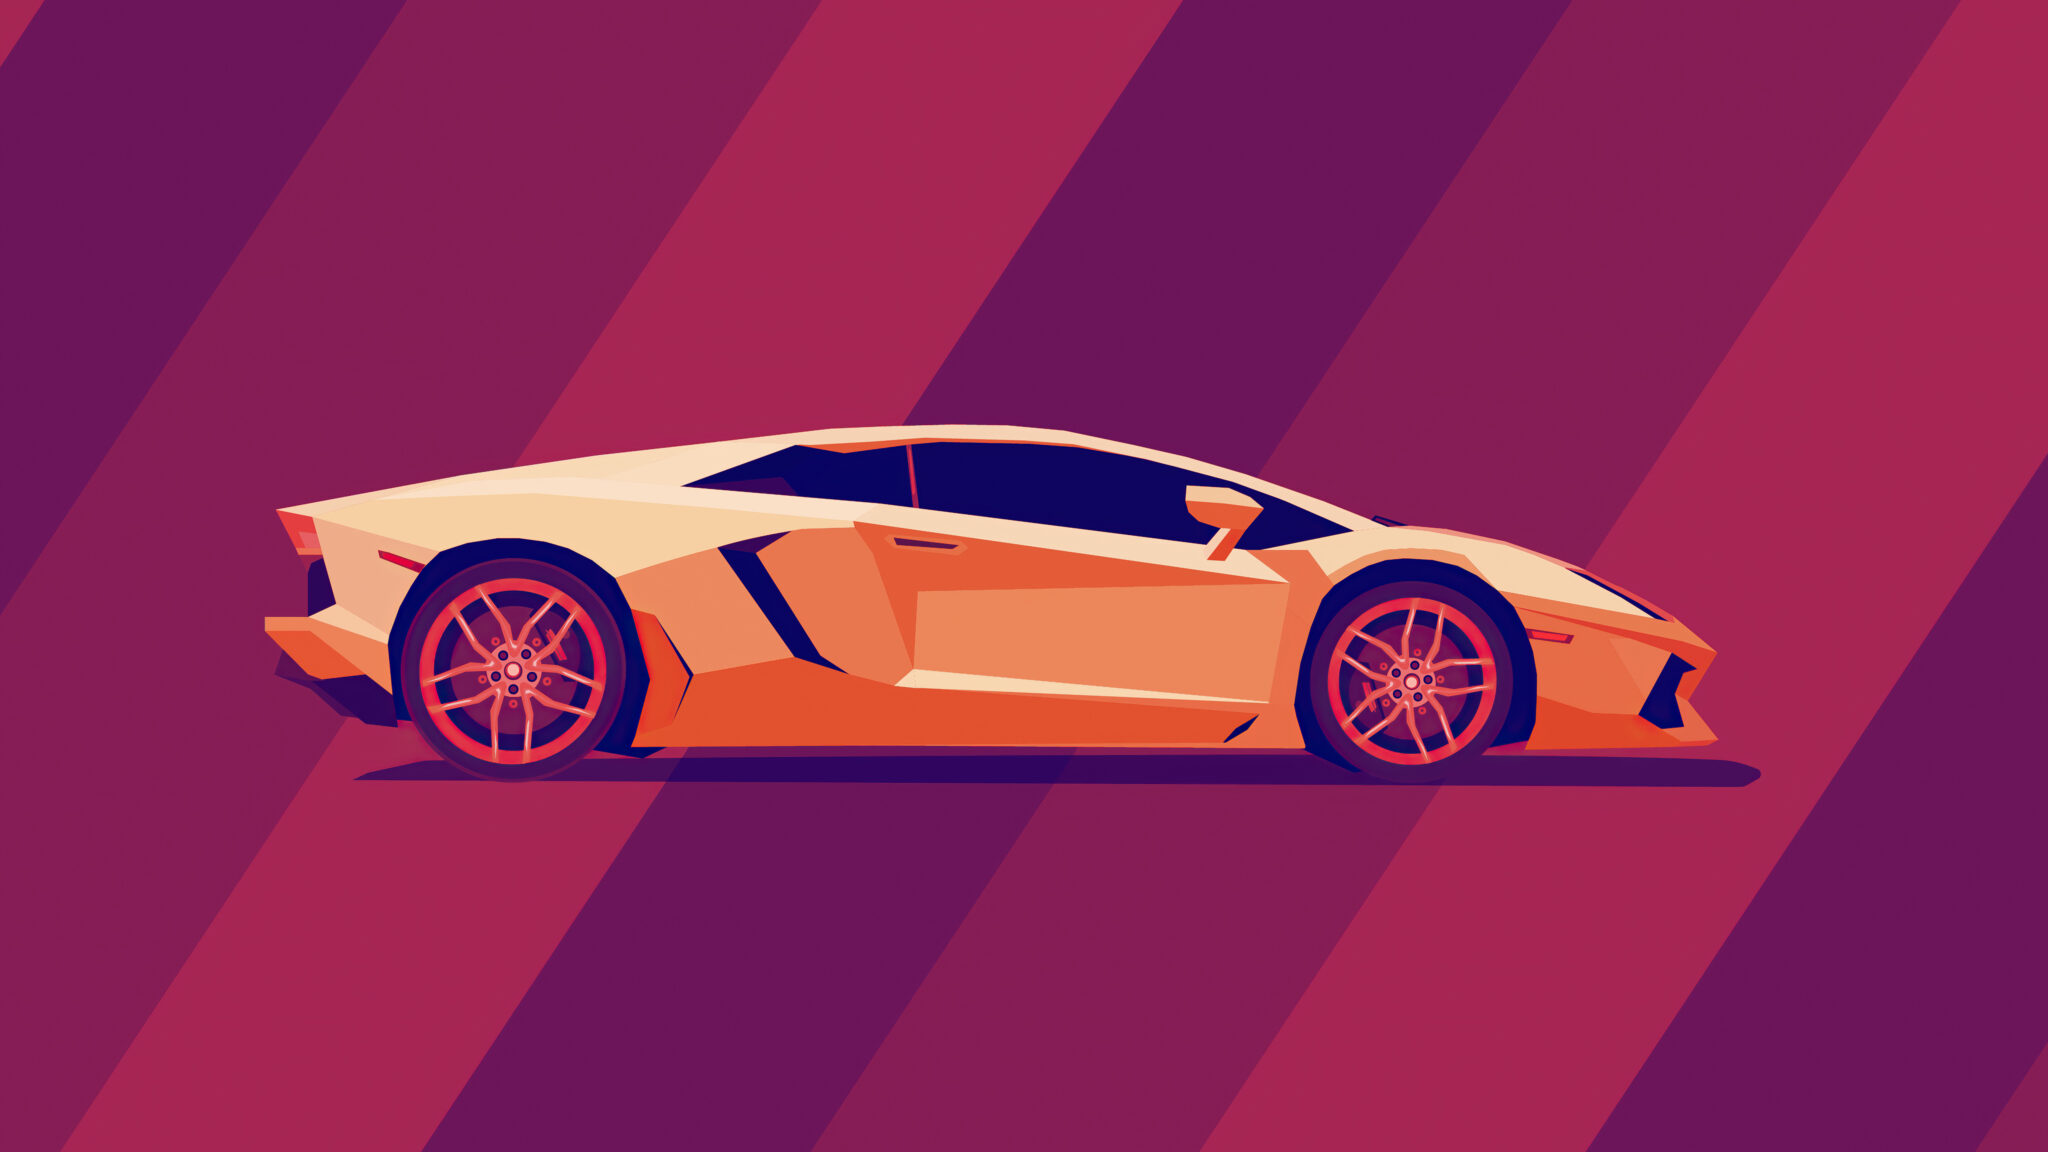 Lamborghini Abstract 4k